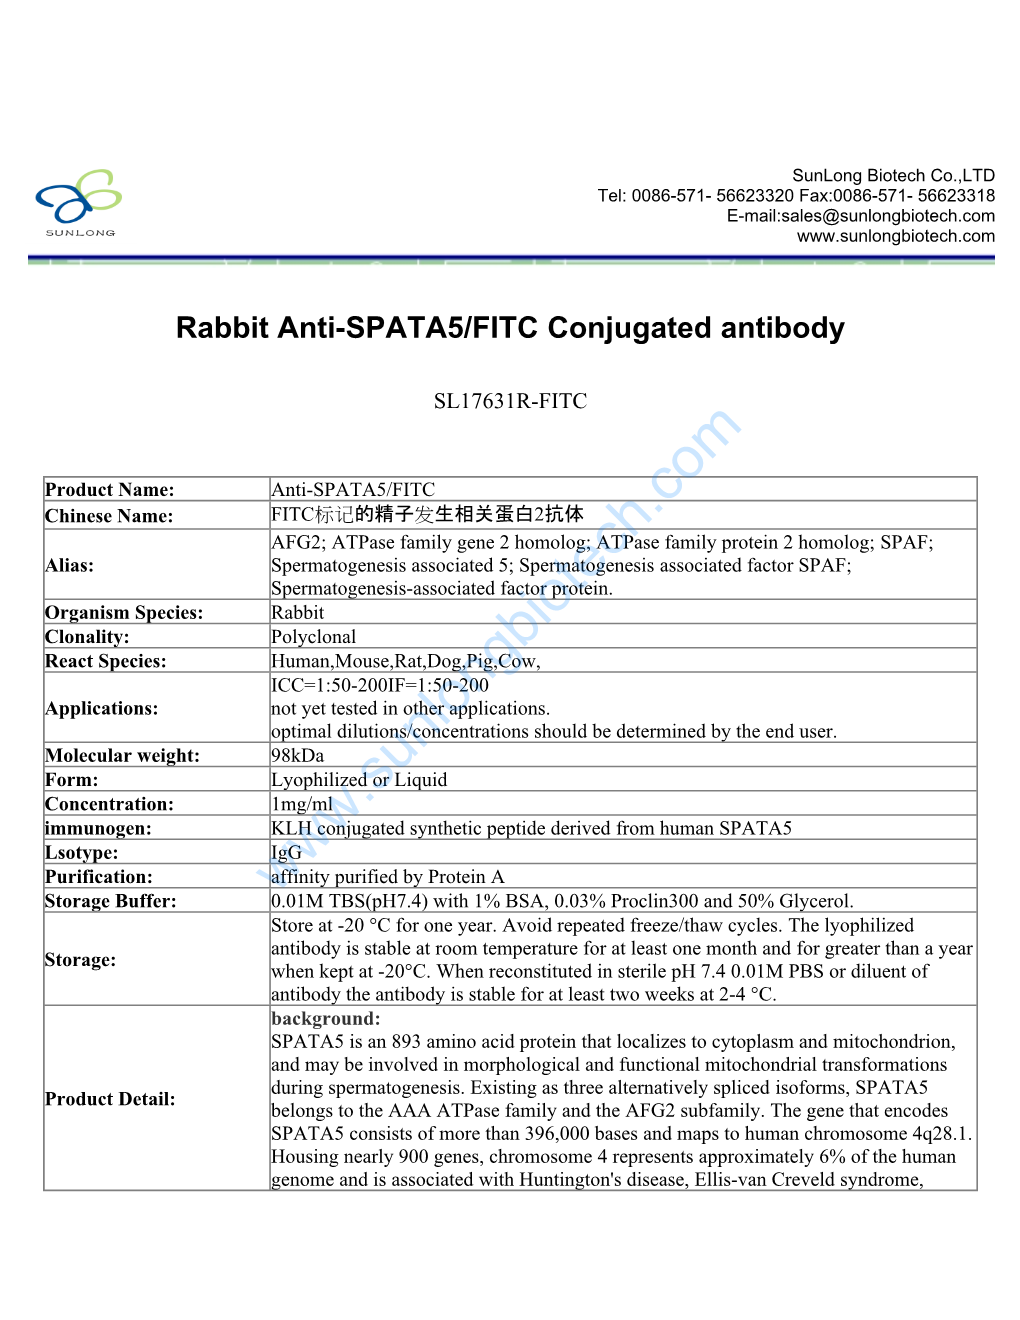 Rabbit Anti-SPATA5/FITC Conjugated Antibody